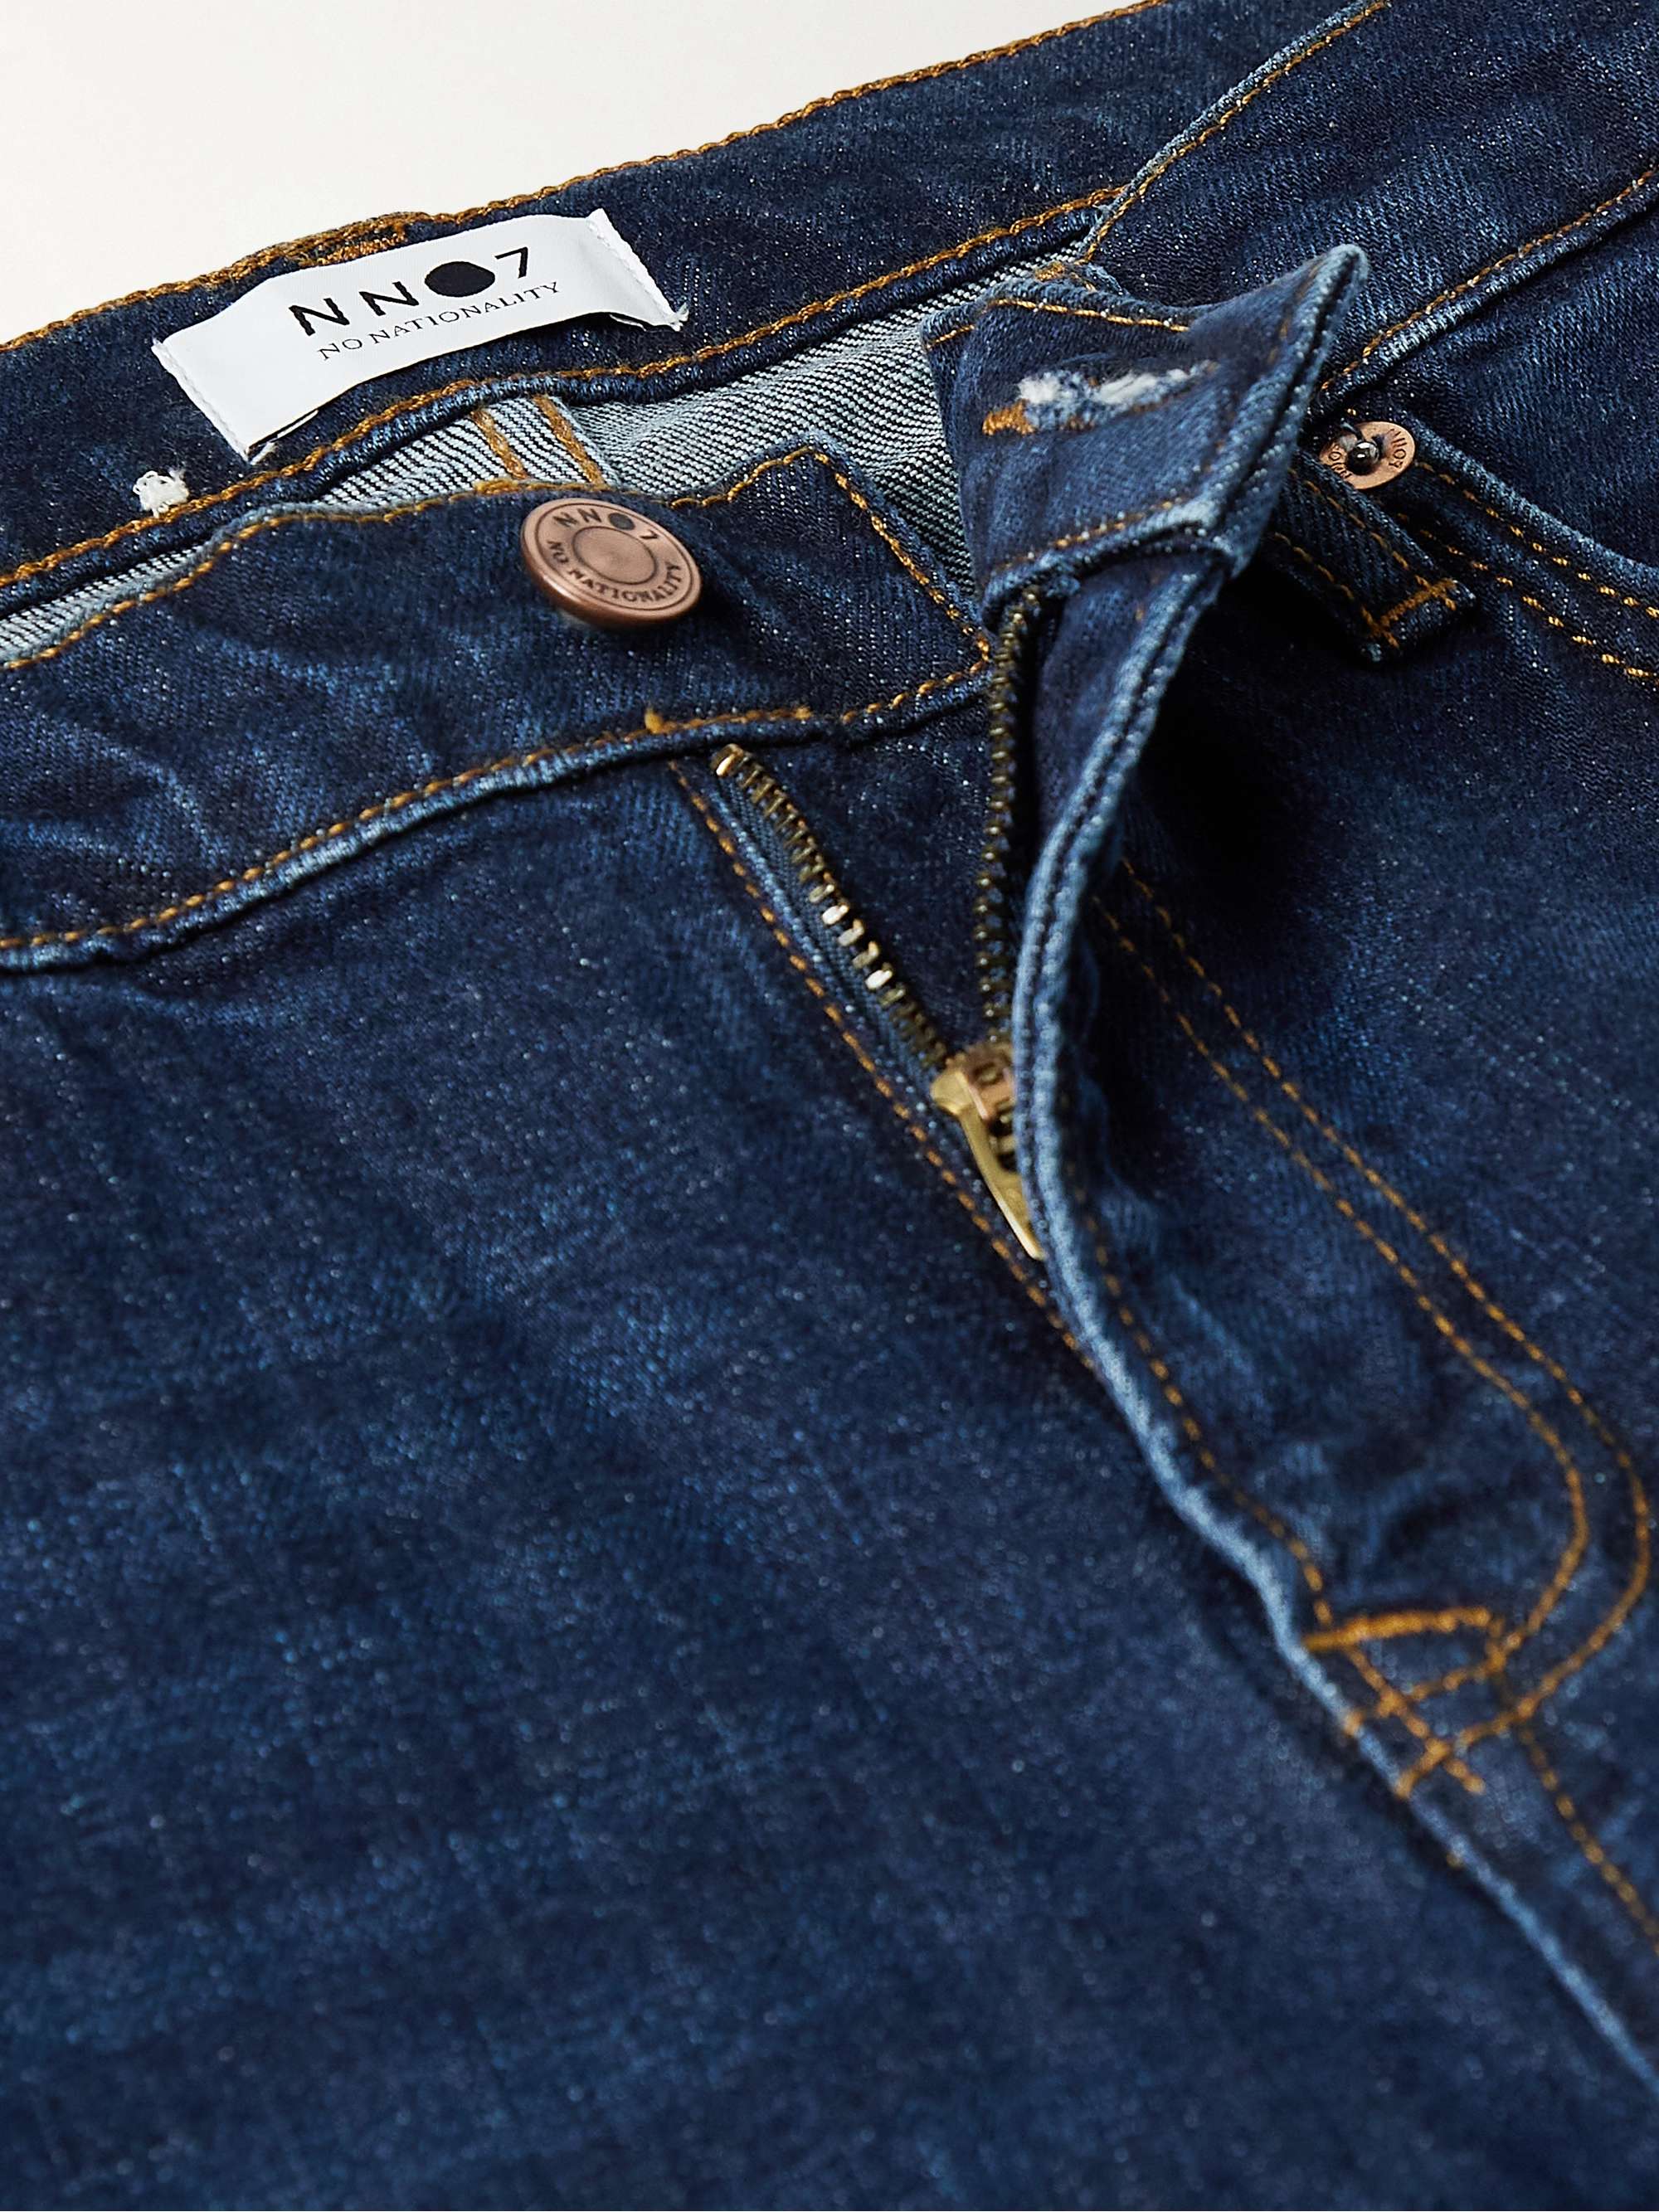 NN07 Slater 1838 Slim-Fit Tapered Distressed Jeans | MR PORTER